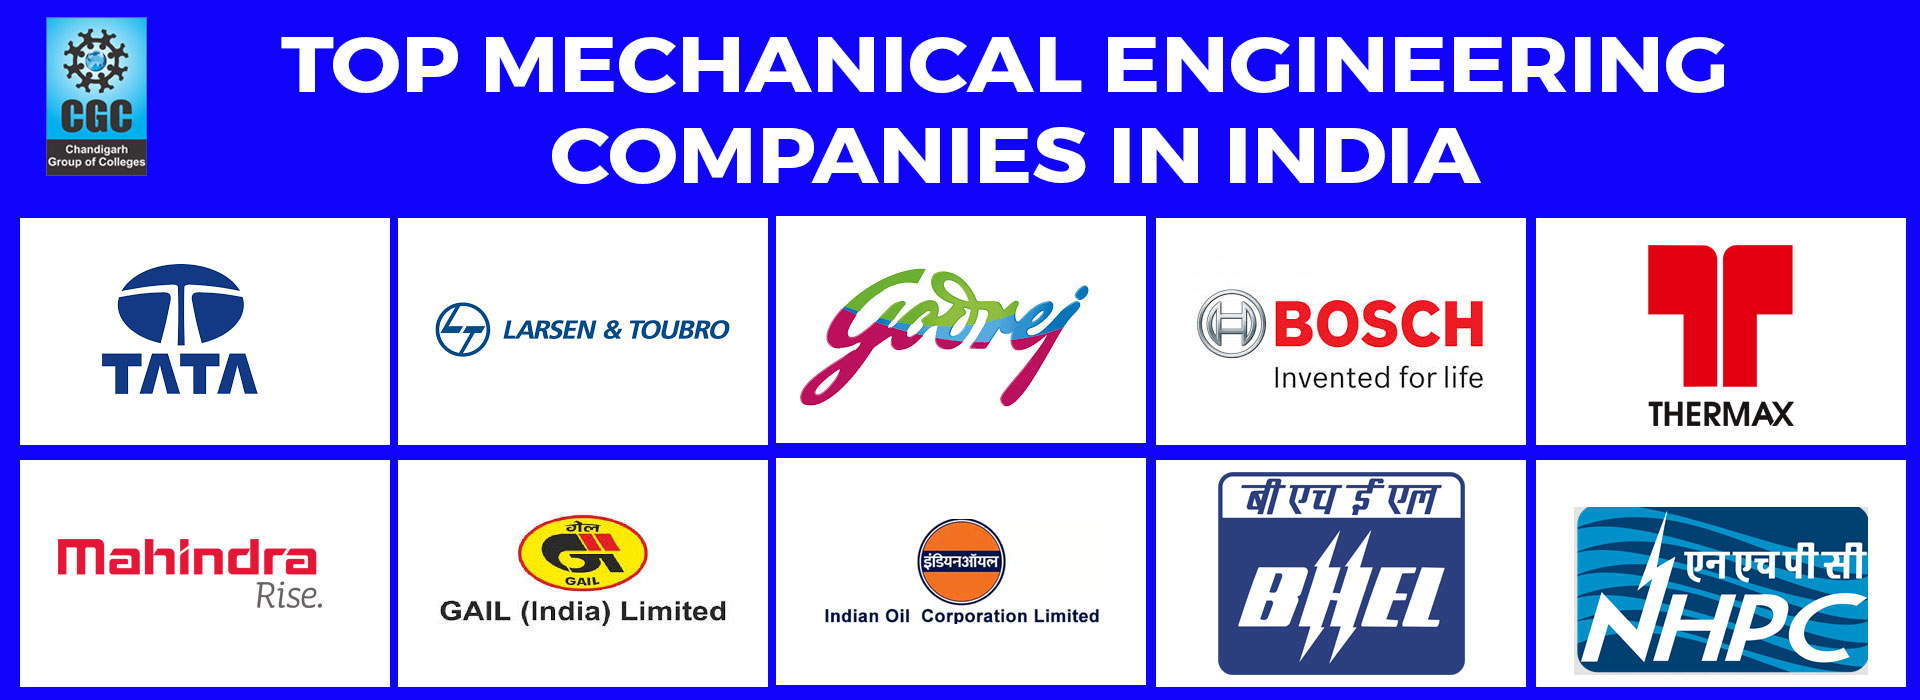 TOP MECHANICAL ENGINEERING COMPANIES IN INDIA 